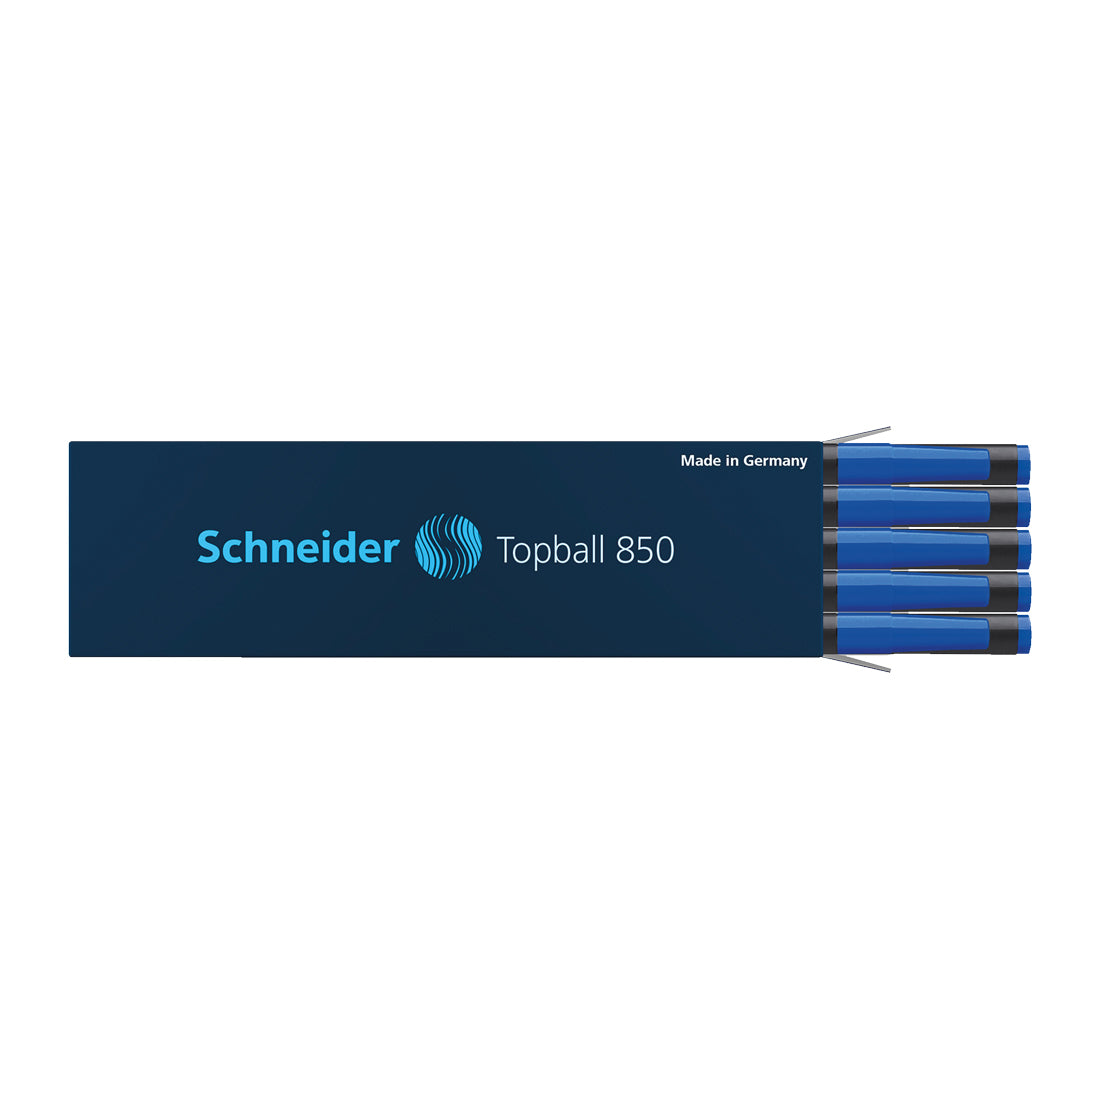 Schneider One Change Rollerball Pen (Blue) - 0.6 mm, Refillable